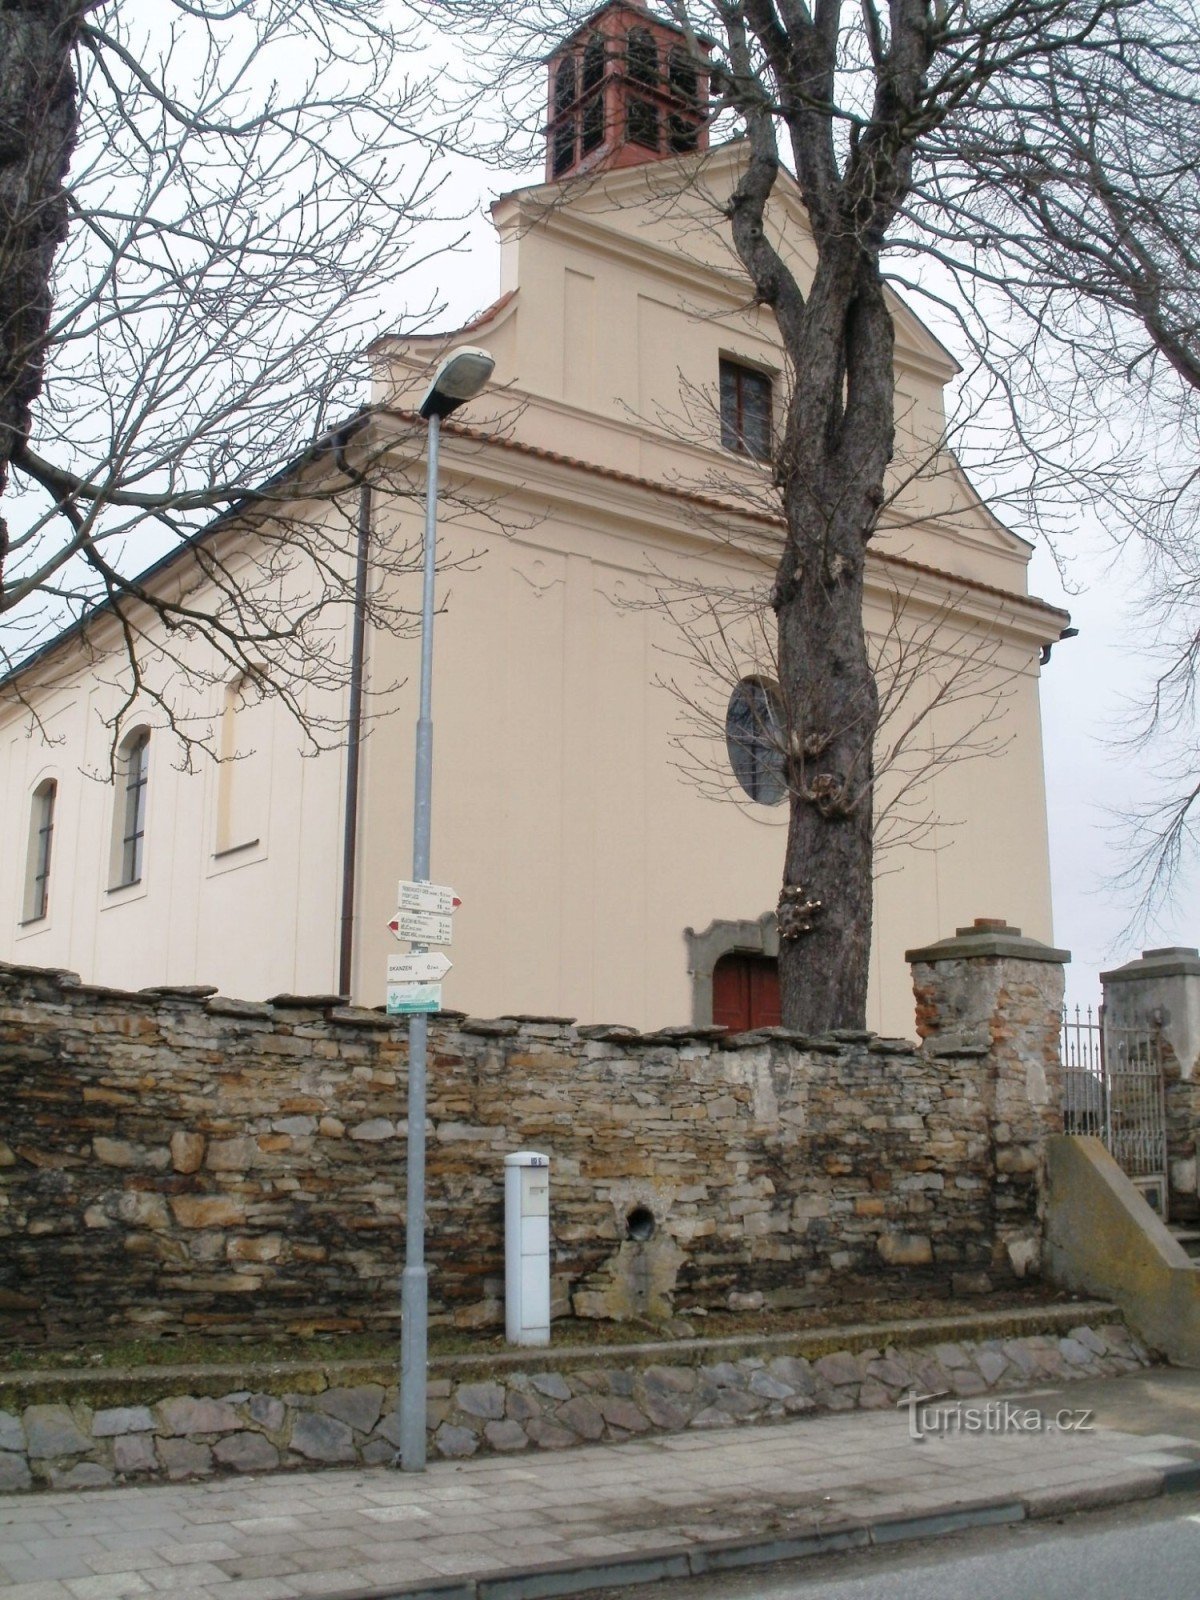 Krňovice 的旅游十字路口